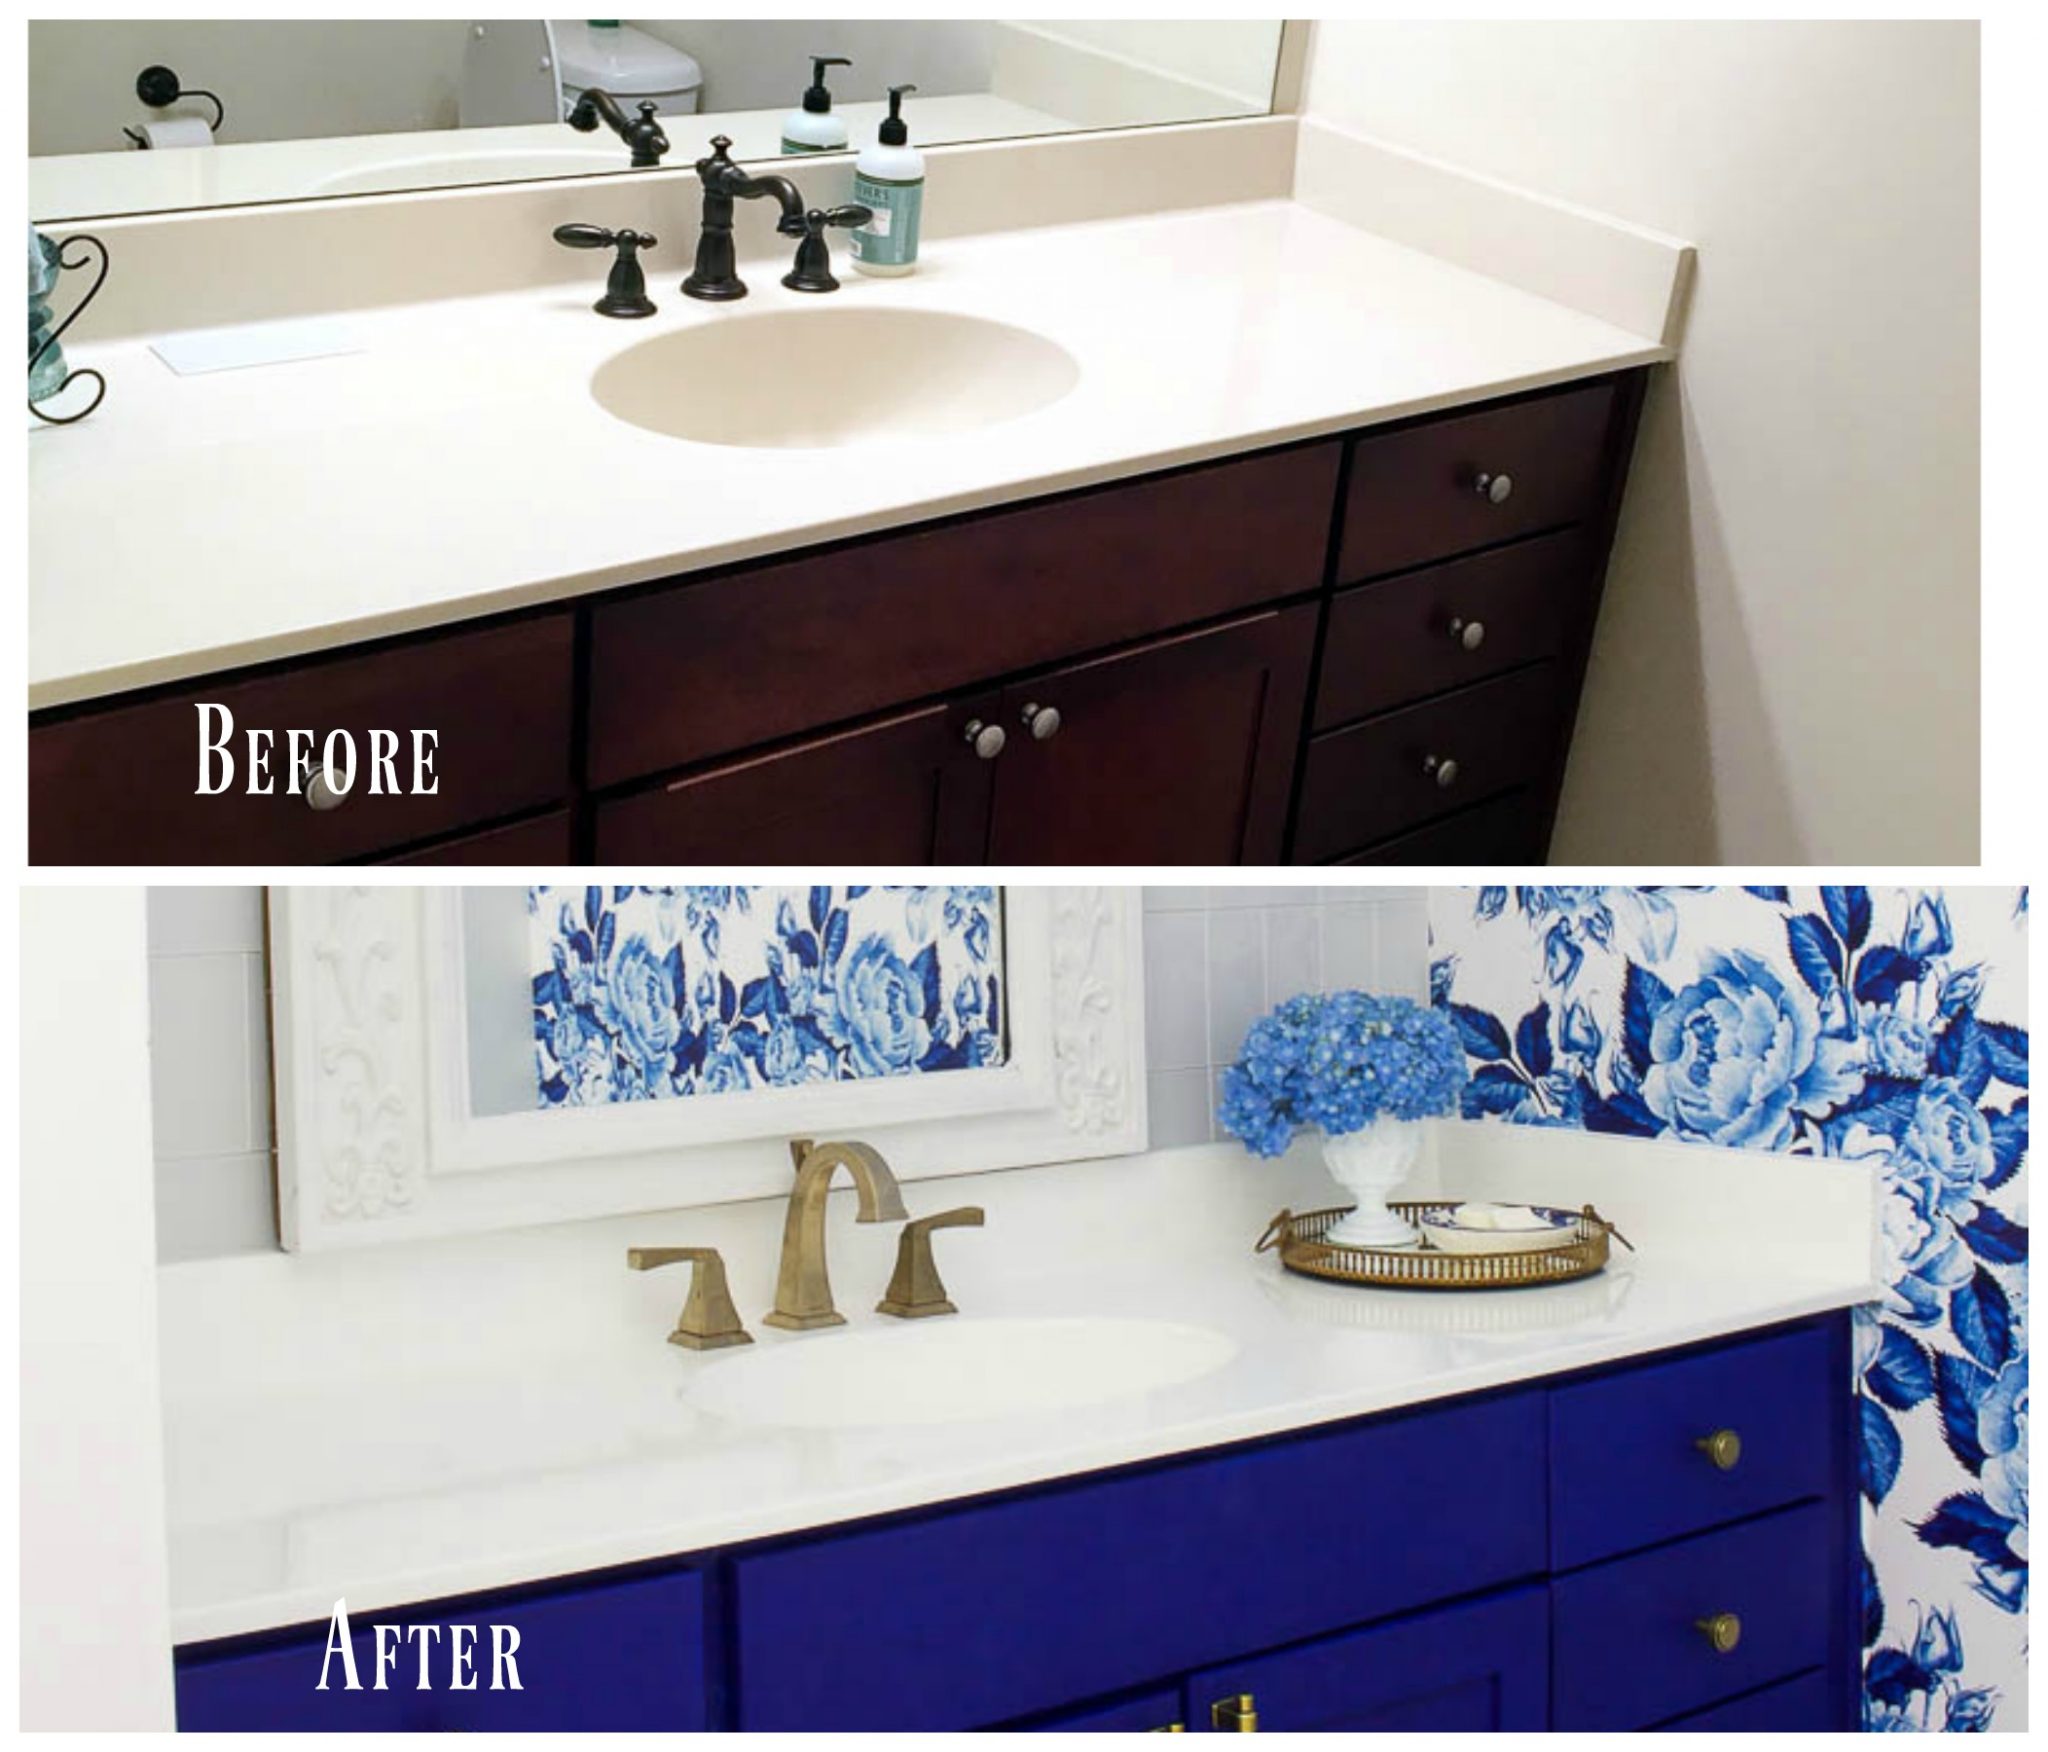 Diy Painted Bathroom Countertop And, Paint Laminate Bathroom Countertops